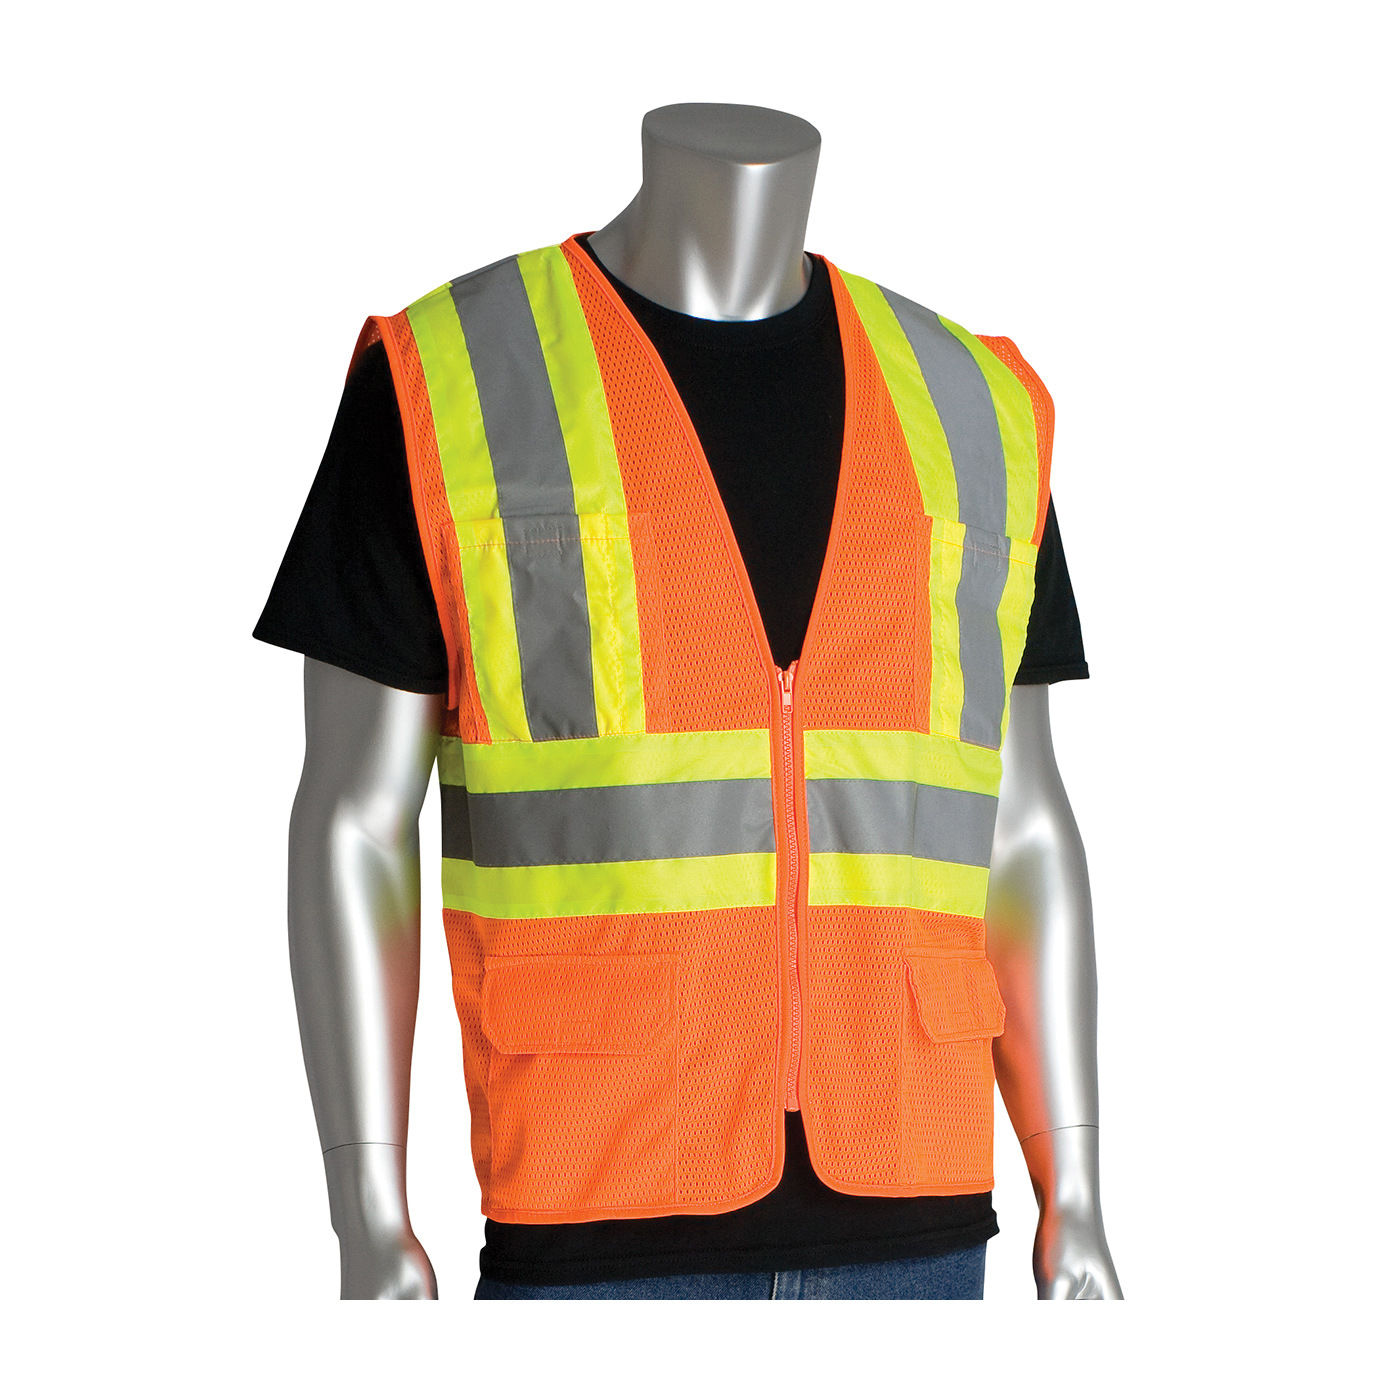 PIP® 302-MVZPOR-M 2-Tone Safety Vest, M, Hi-Viz Orange, Polyester Mesh, Zipper Closure, 6 Pockets, ANSI Class: Class 2, Specifications Met: ANSI 107 Type R